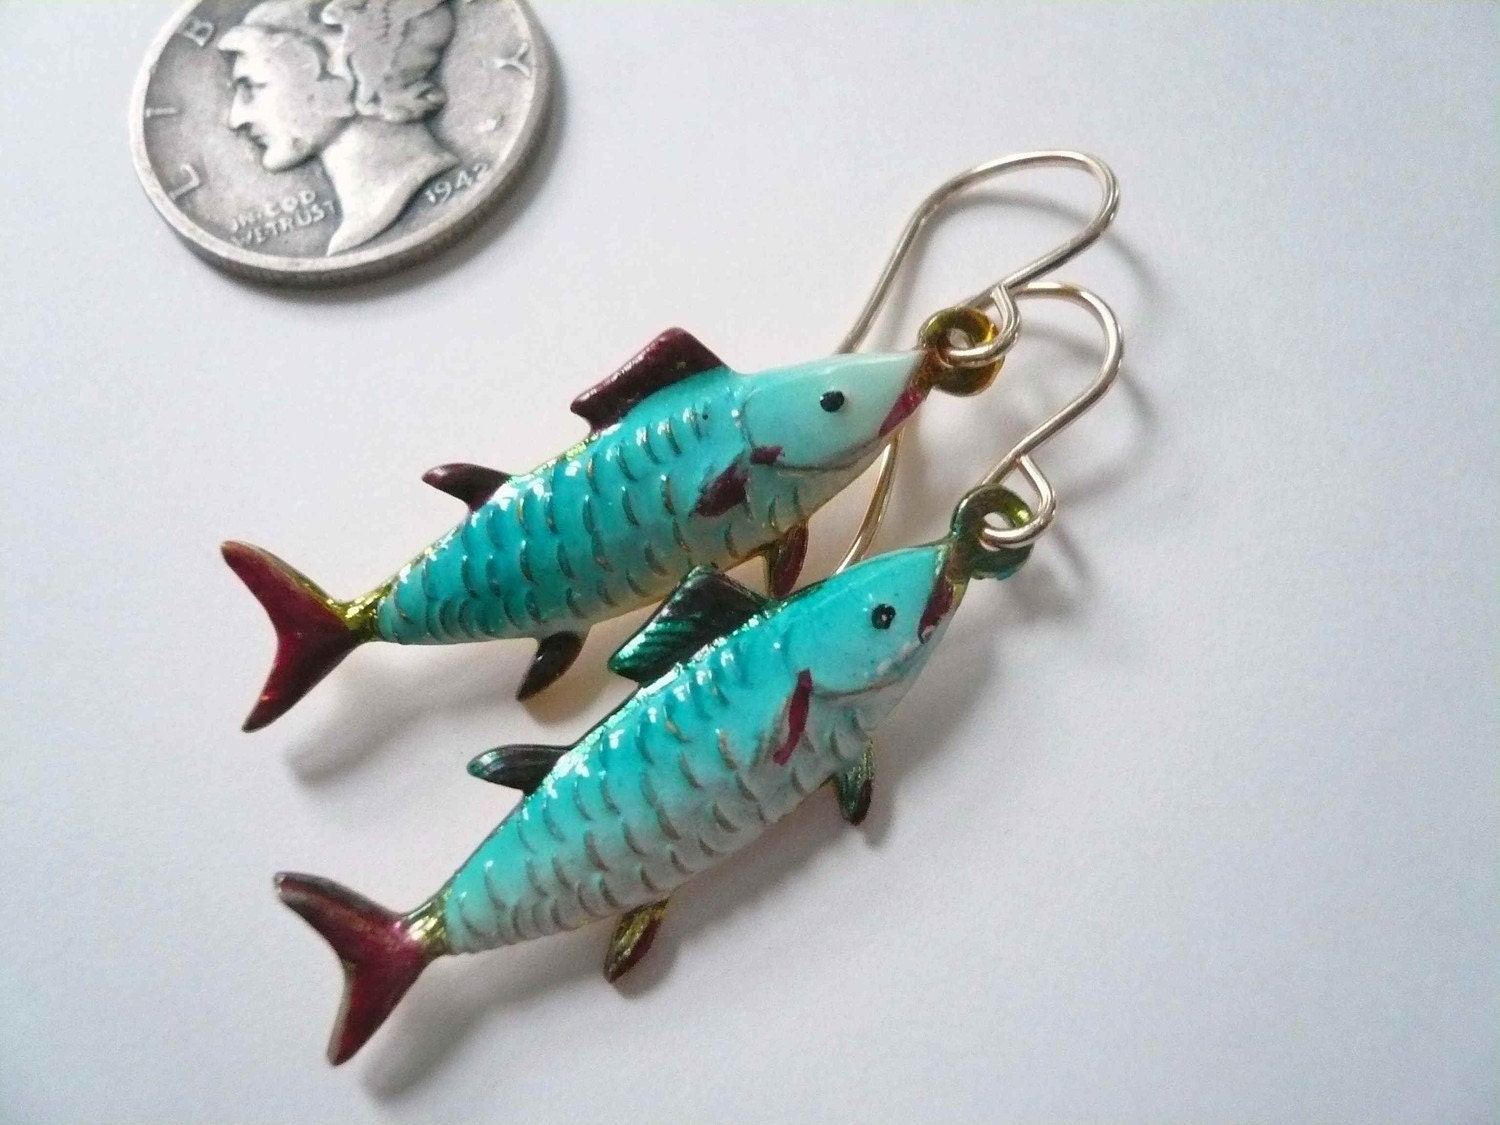 Angler earrings. Fun vintage fish pendants on 14K gold fill earwires.